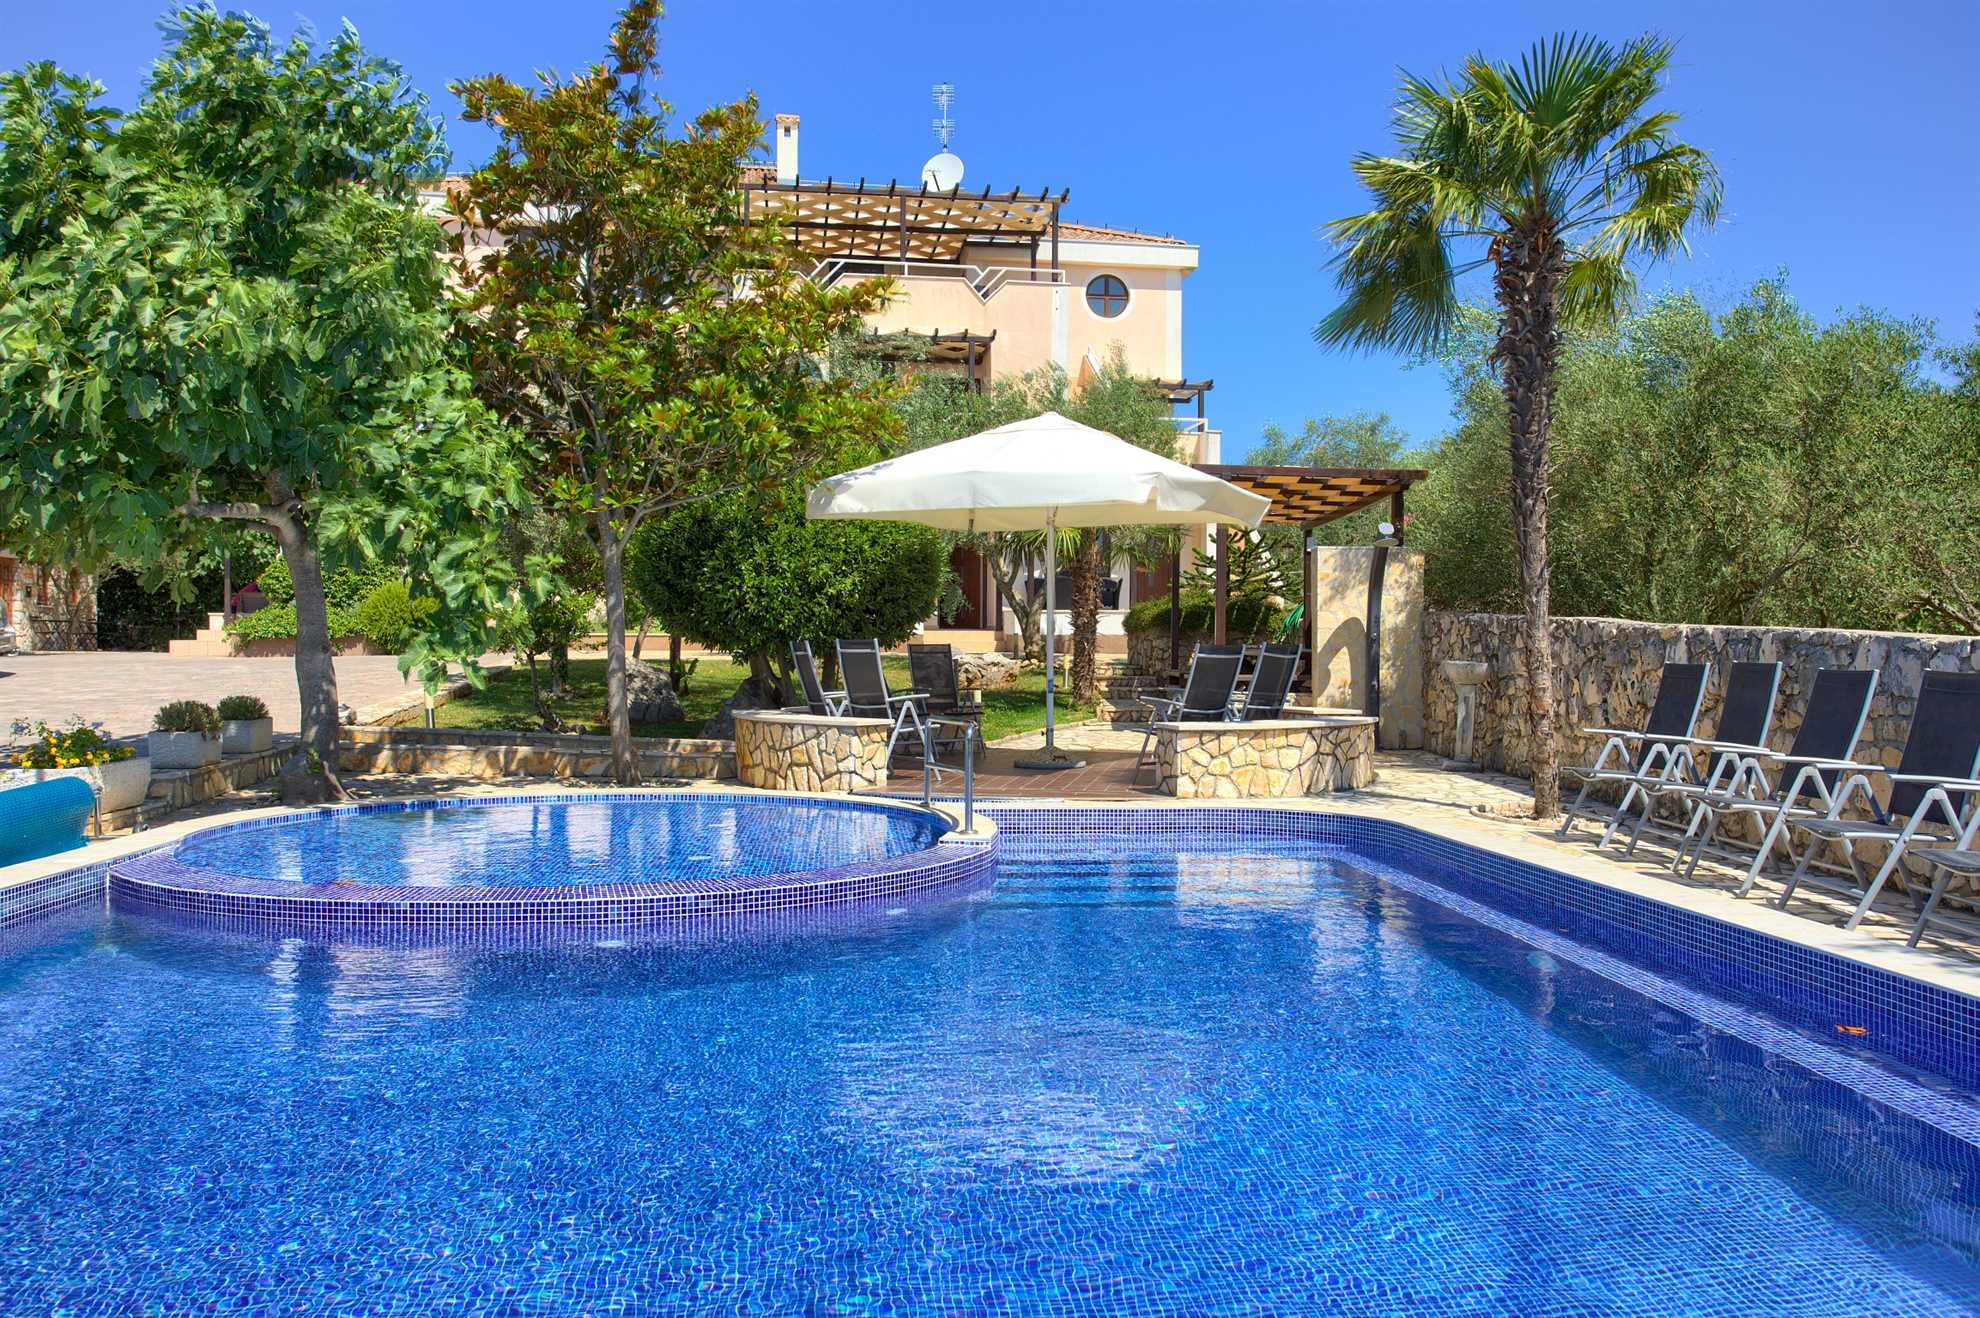 Villa Haya - appartamento KAMELIJA con piscina riscaldata